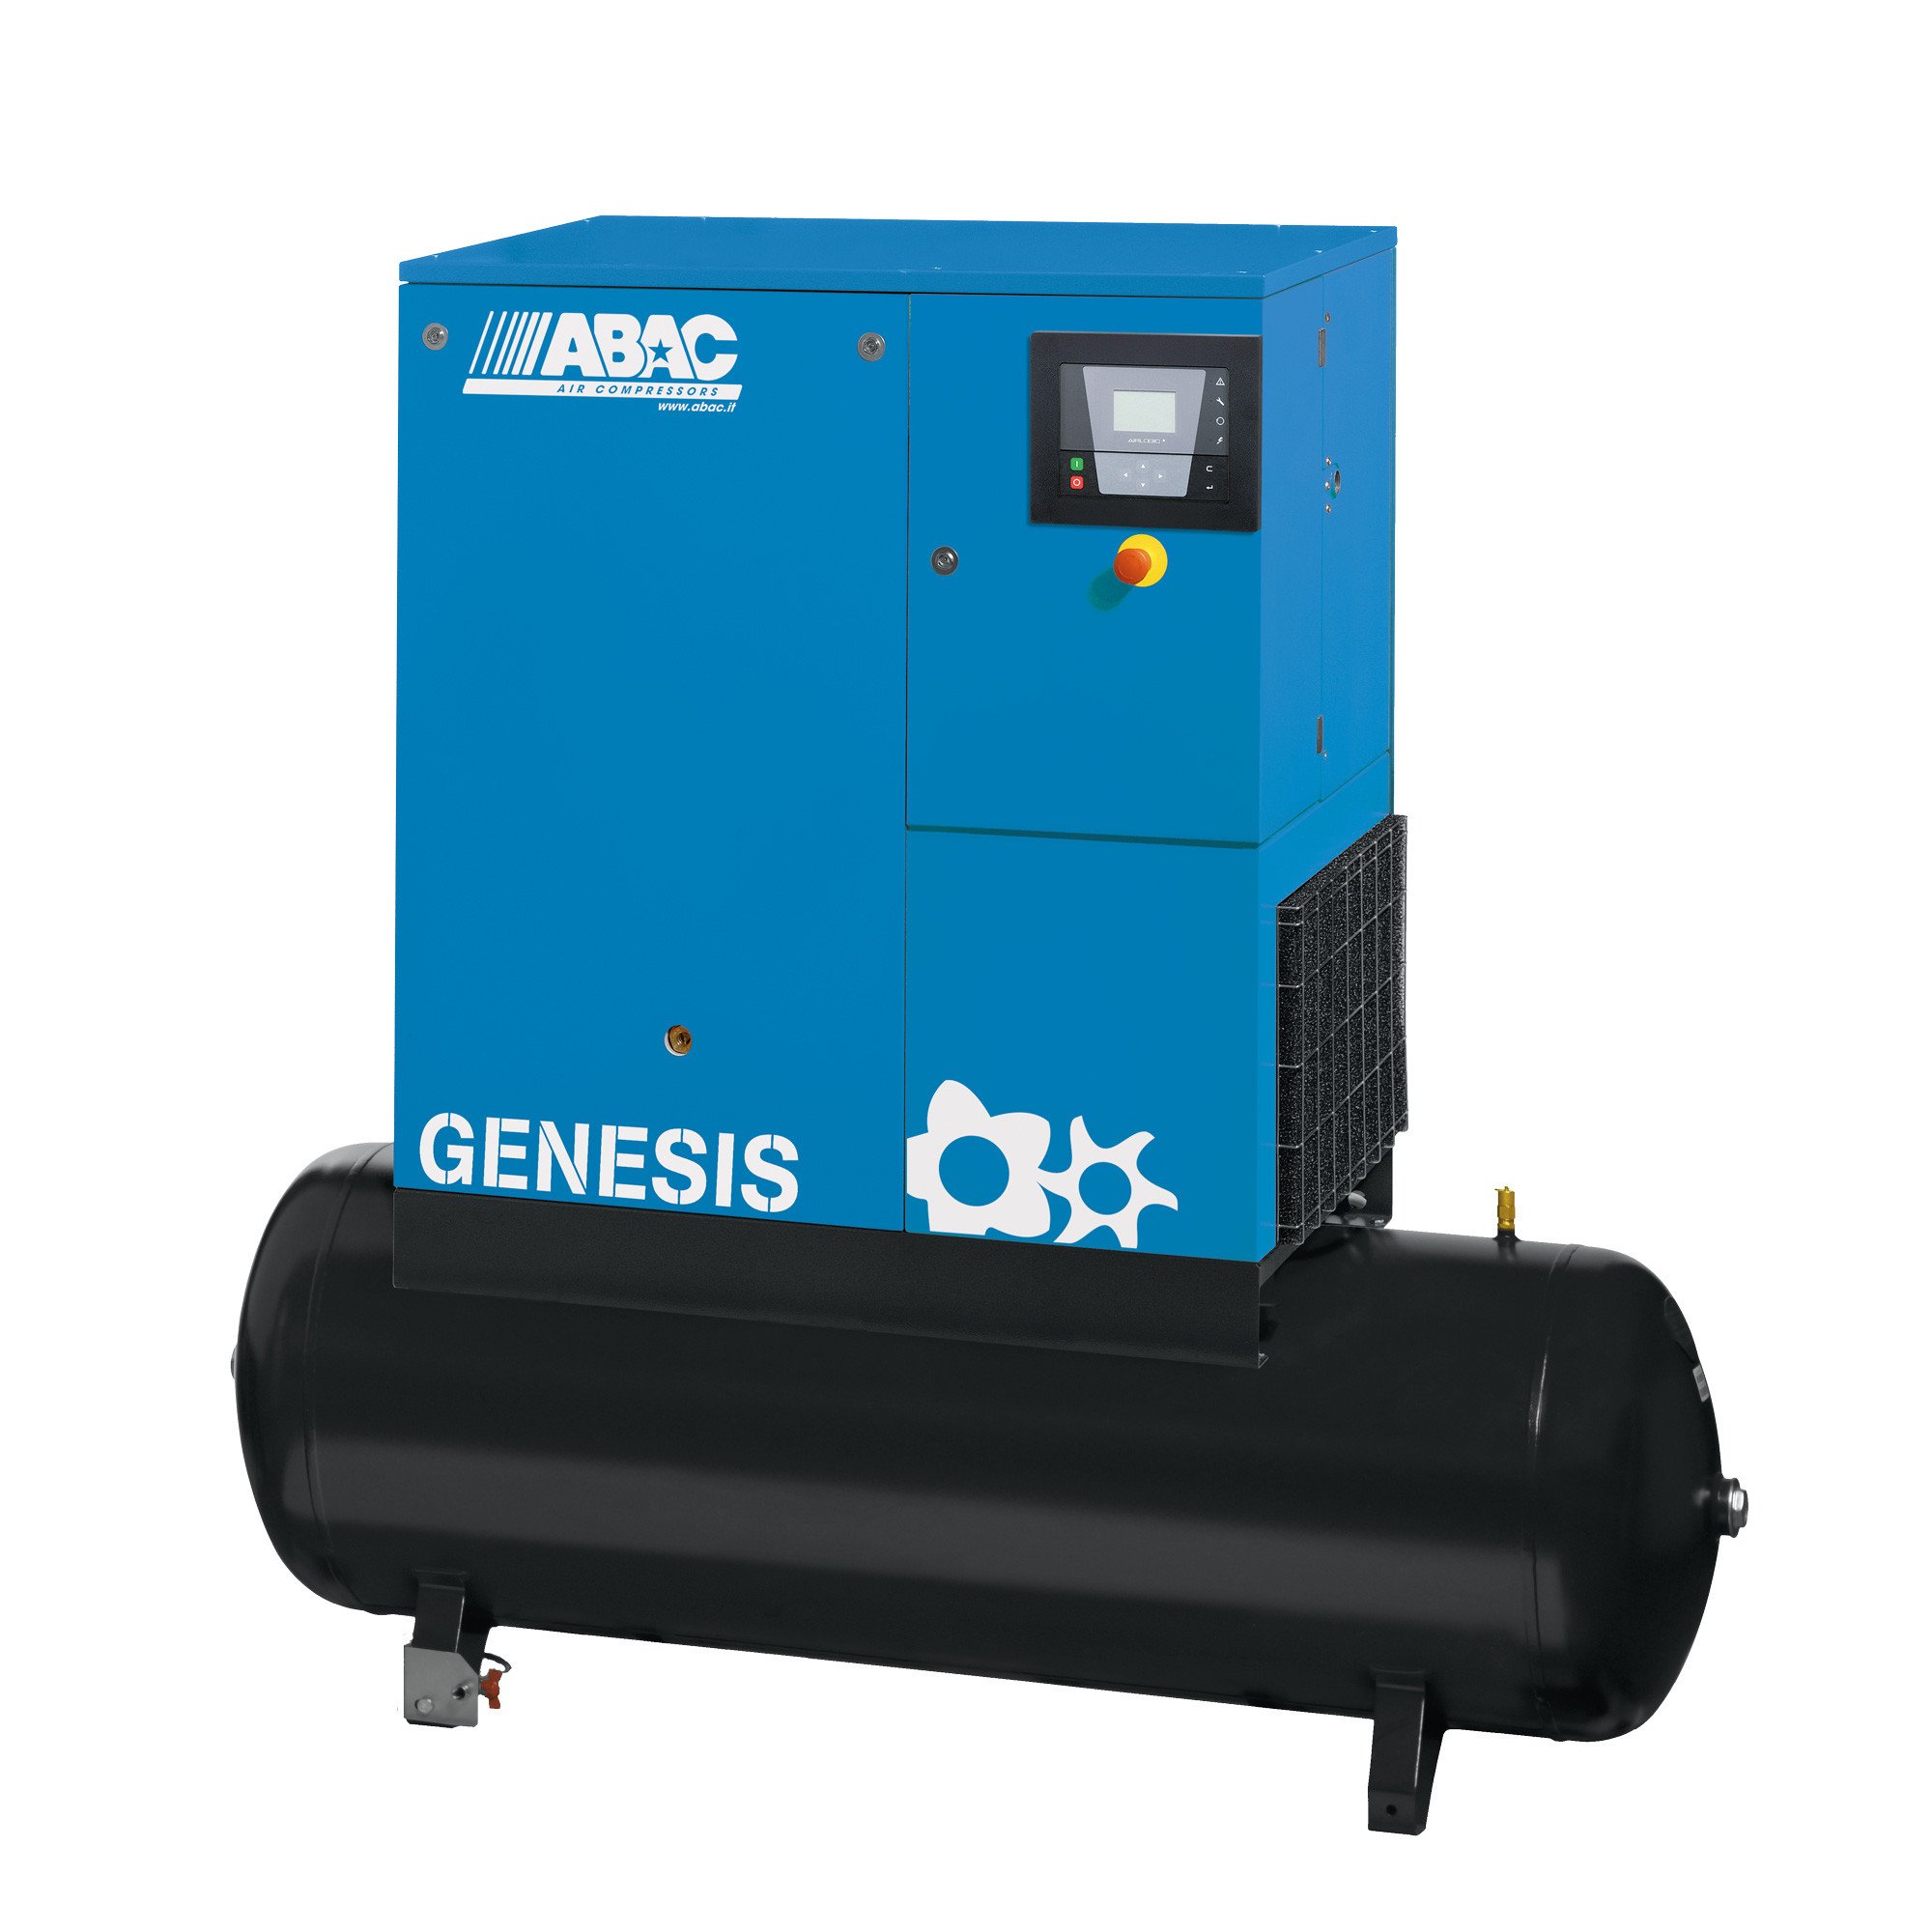 ABAC Genesis 500L, 42.4 CFM, 11千瓦固定转速螺杆空压机